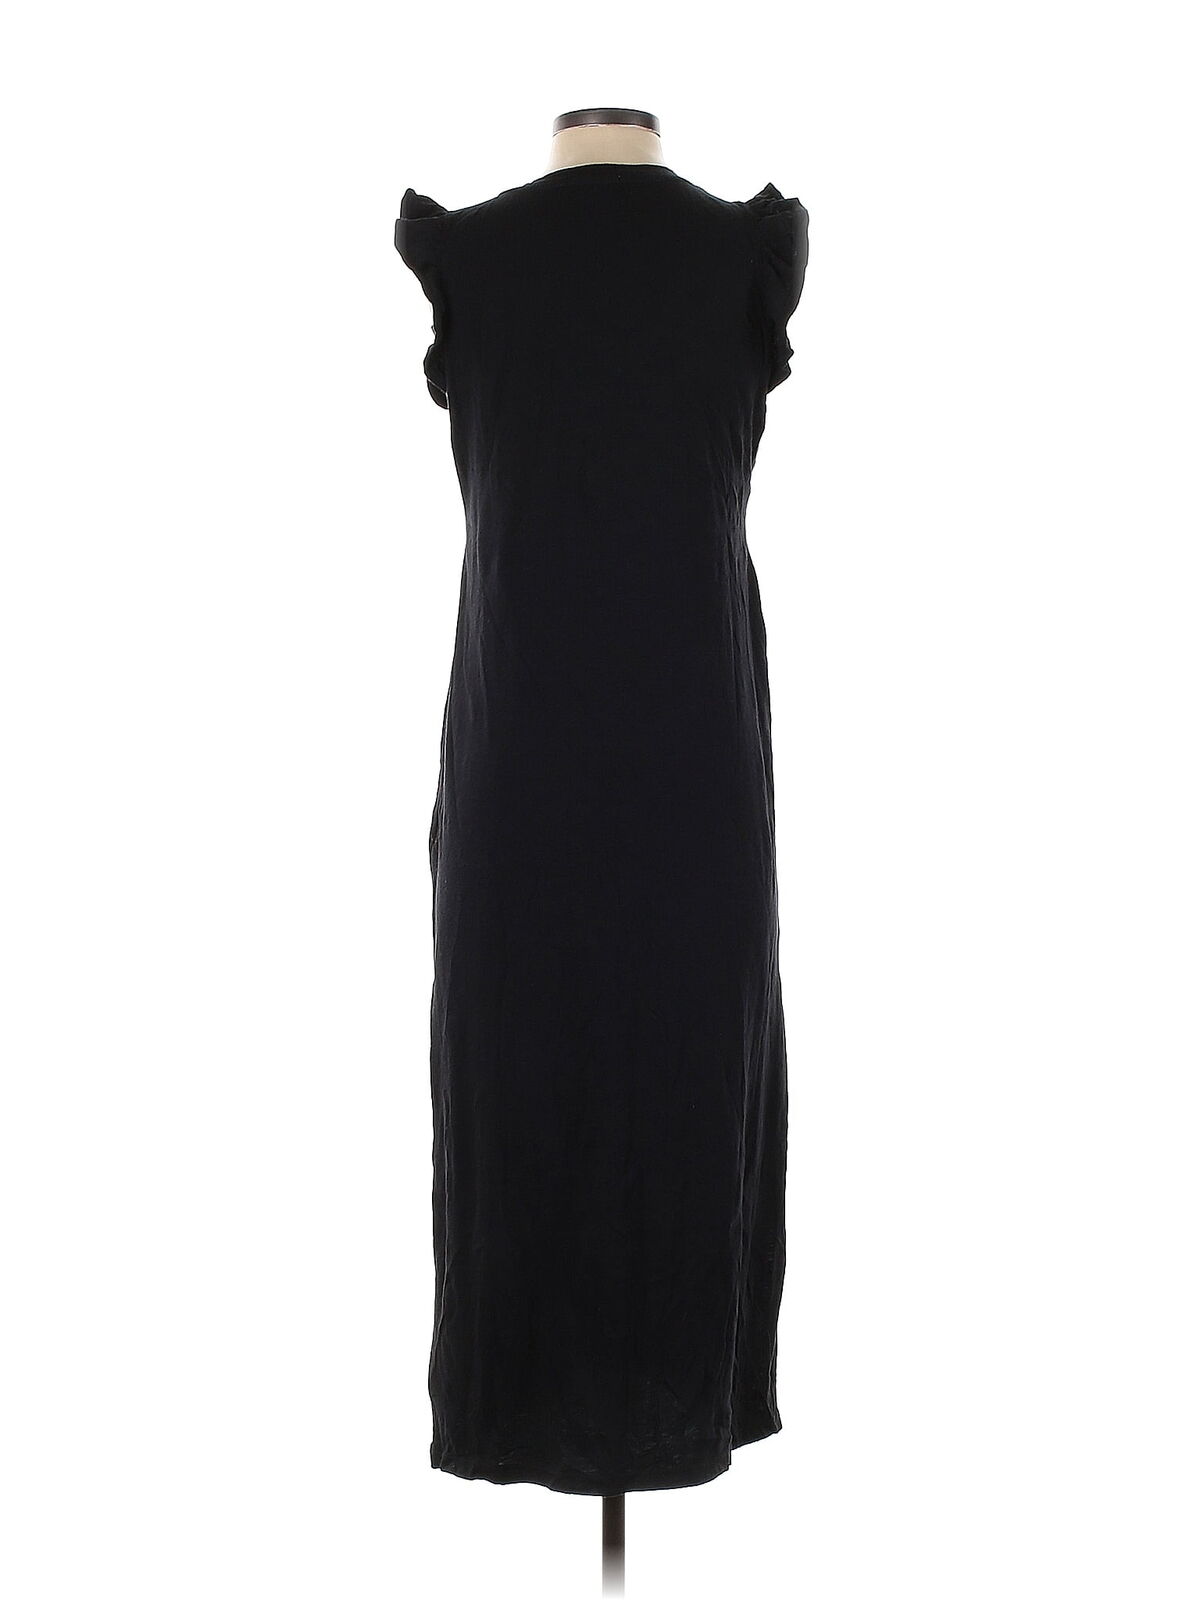 Sundry Women Black Casual Dress S - image 2